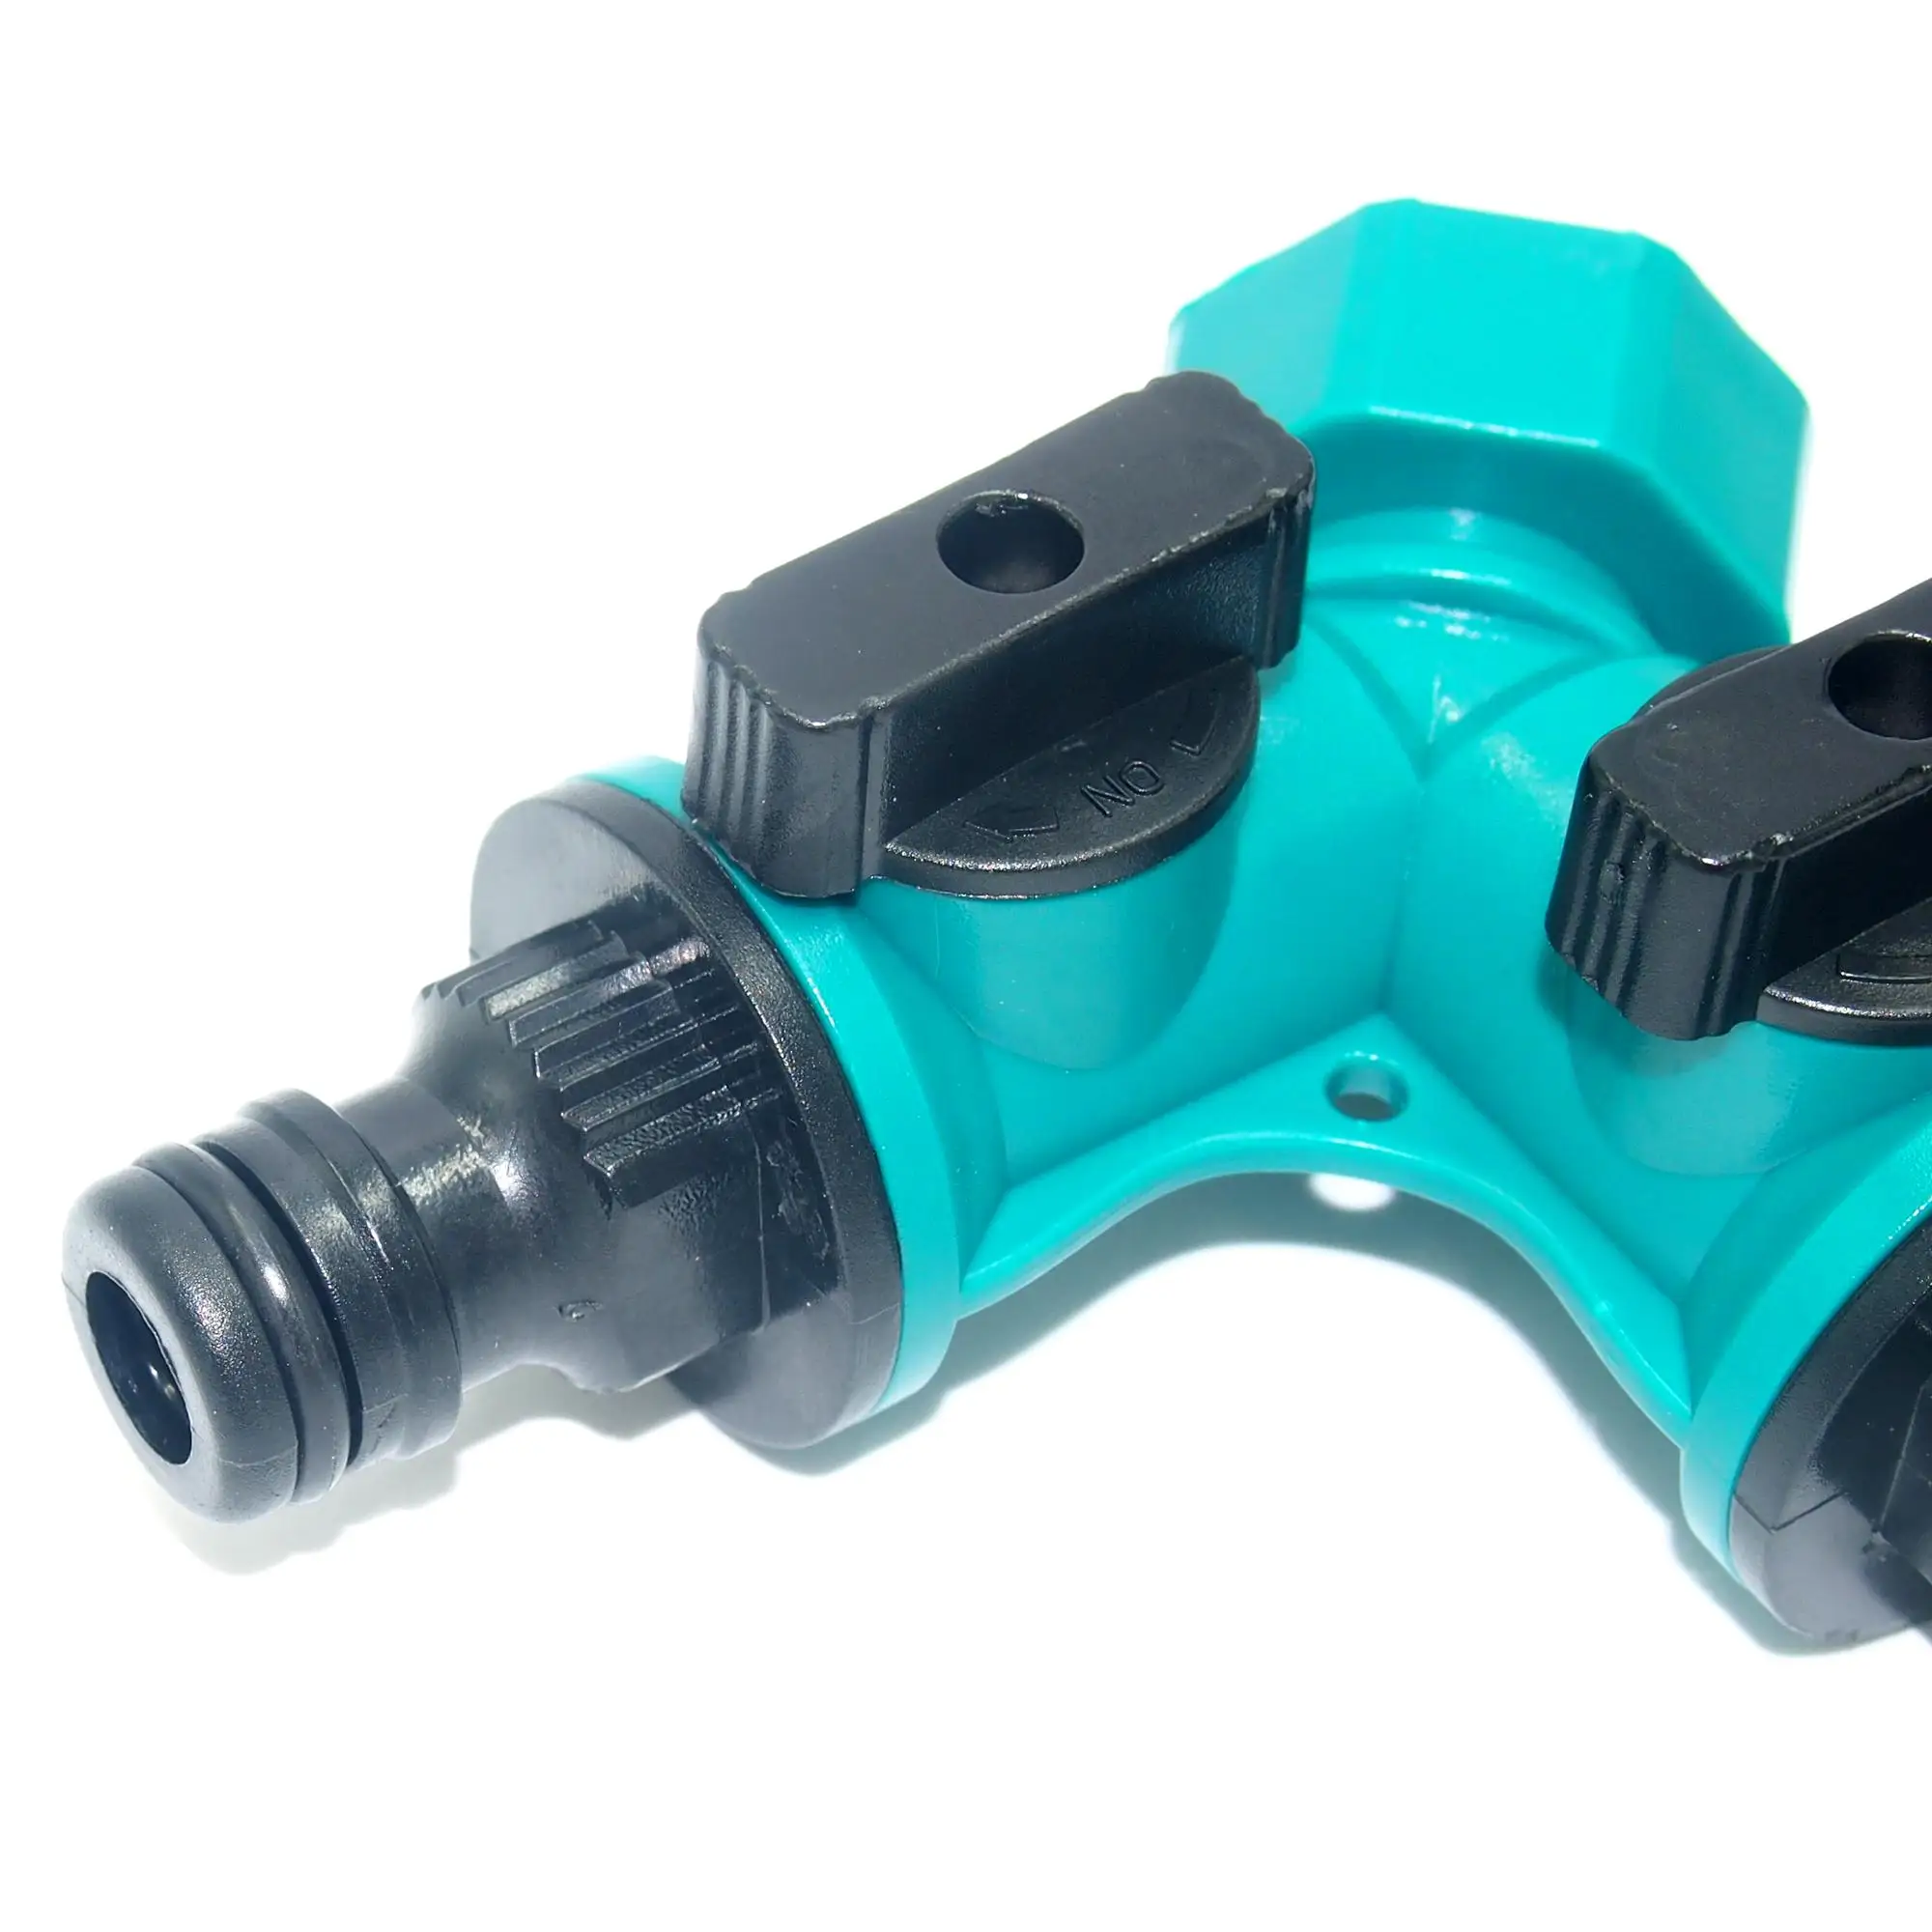 Plastic garden 2-way  hose splitter with valve